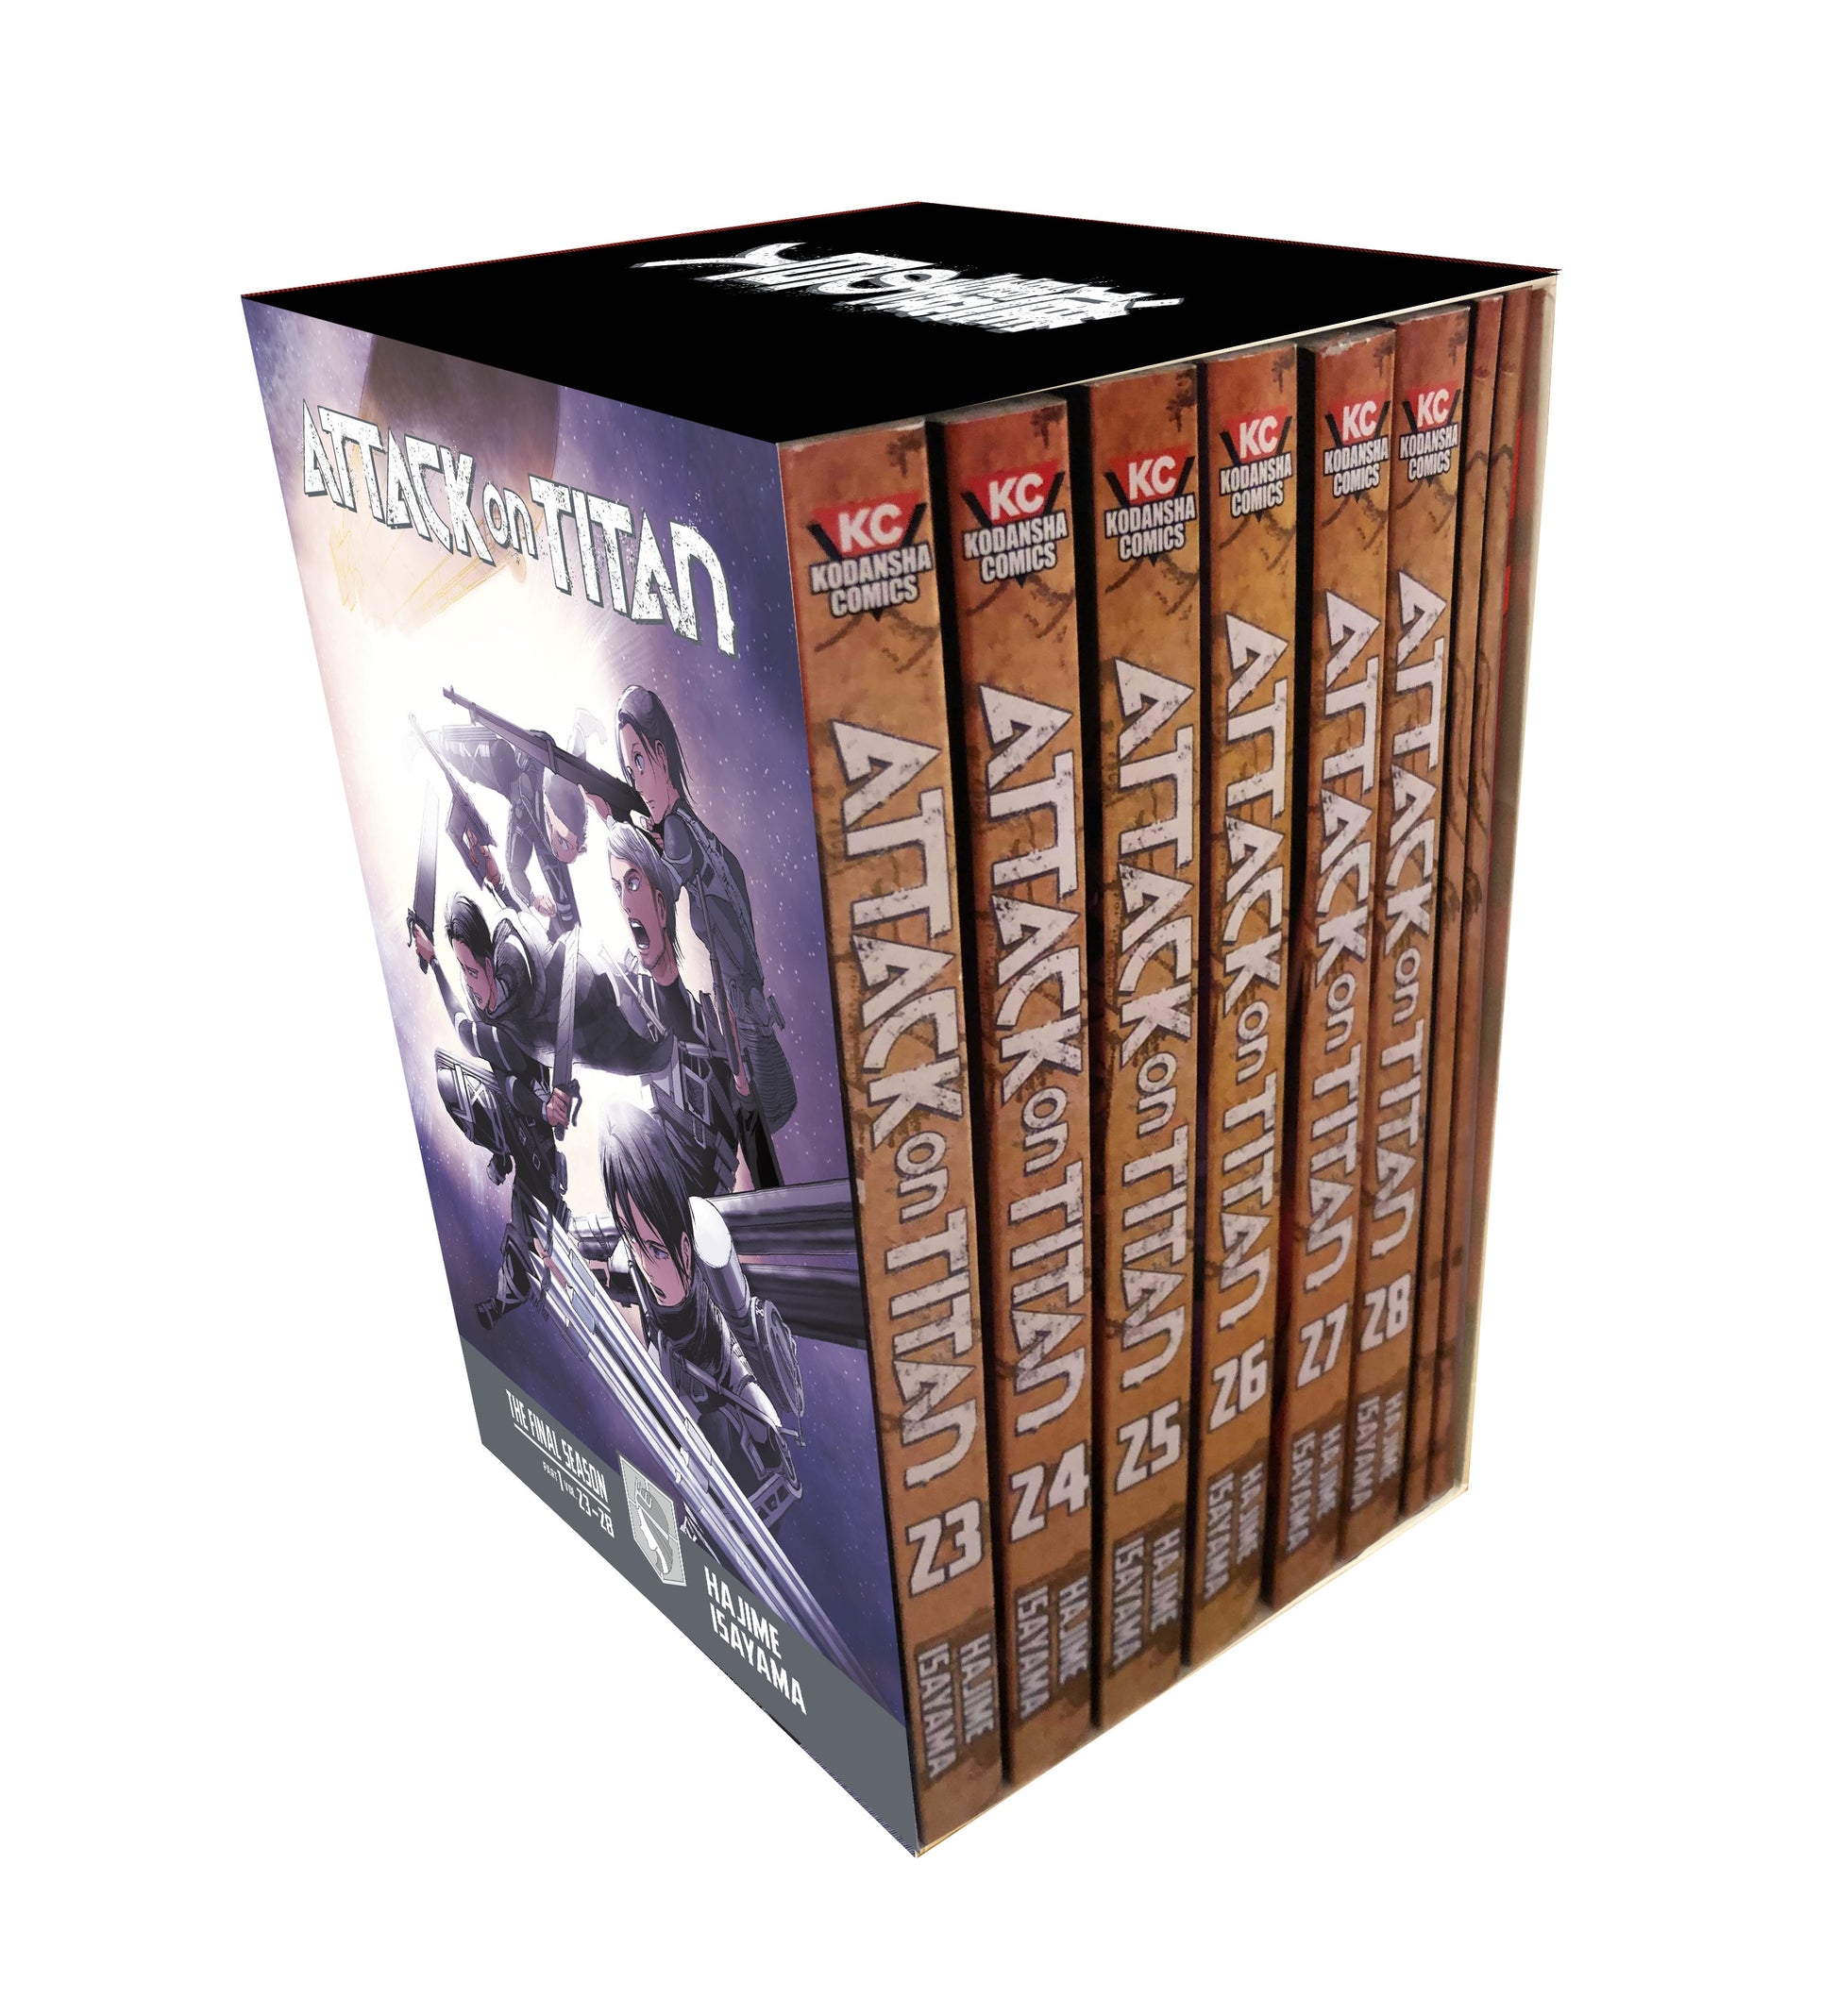 Attack on Titan The Final Season Part 1 Manga Box Set - Manga Warehouse